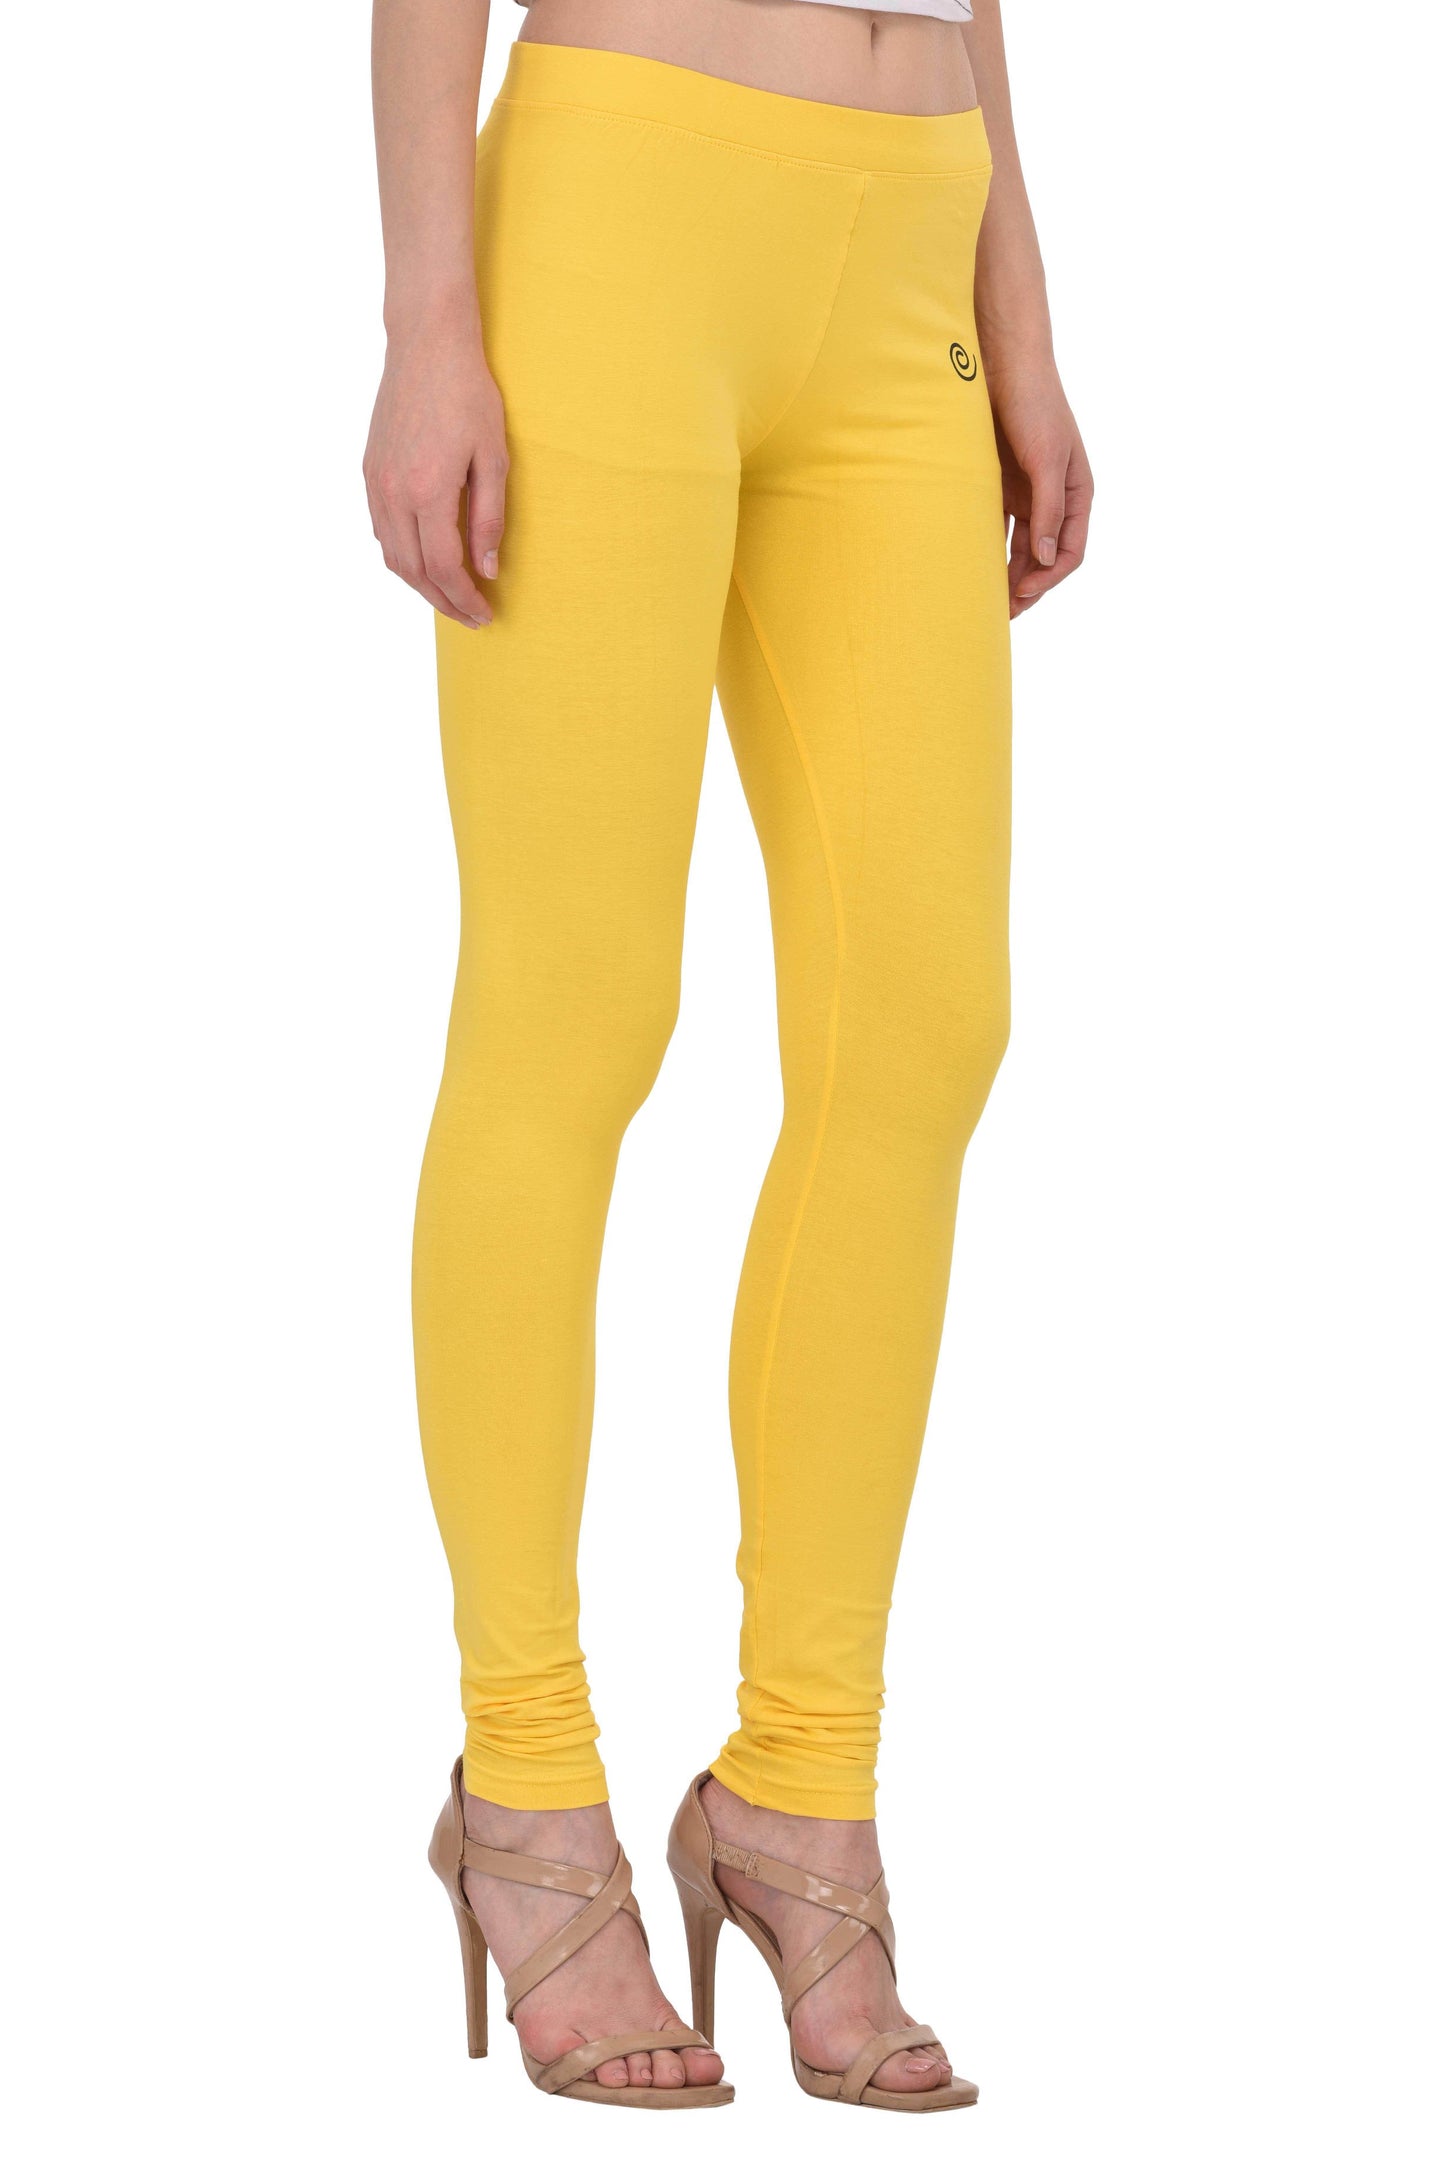 Diti Yellow Cotton Leggings for Women Diti